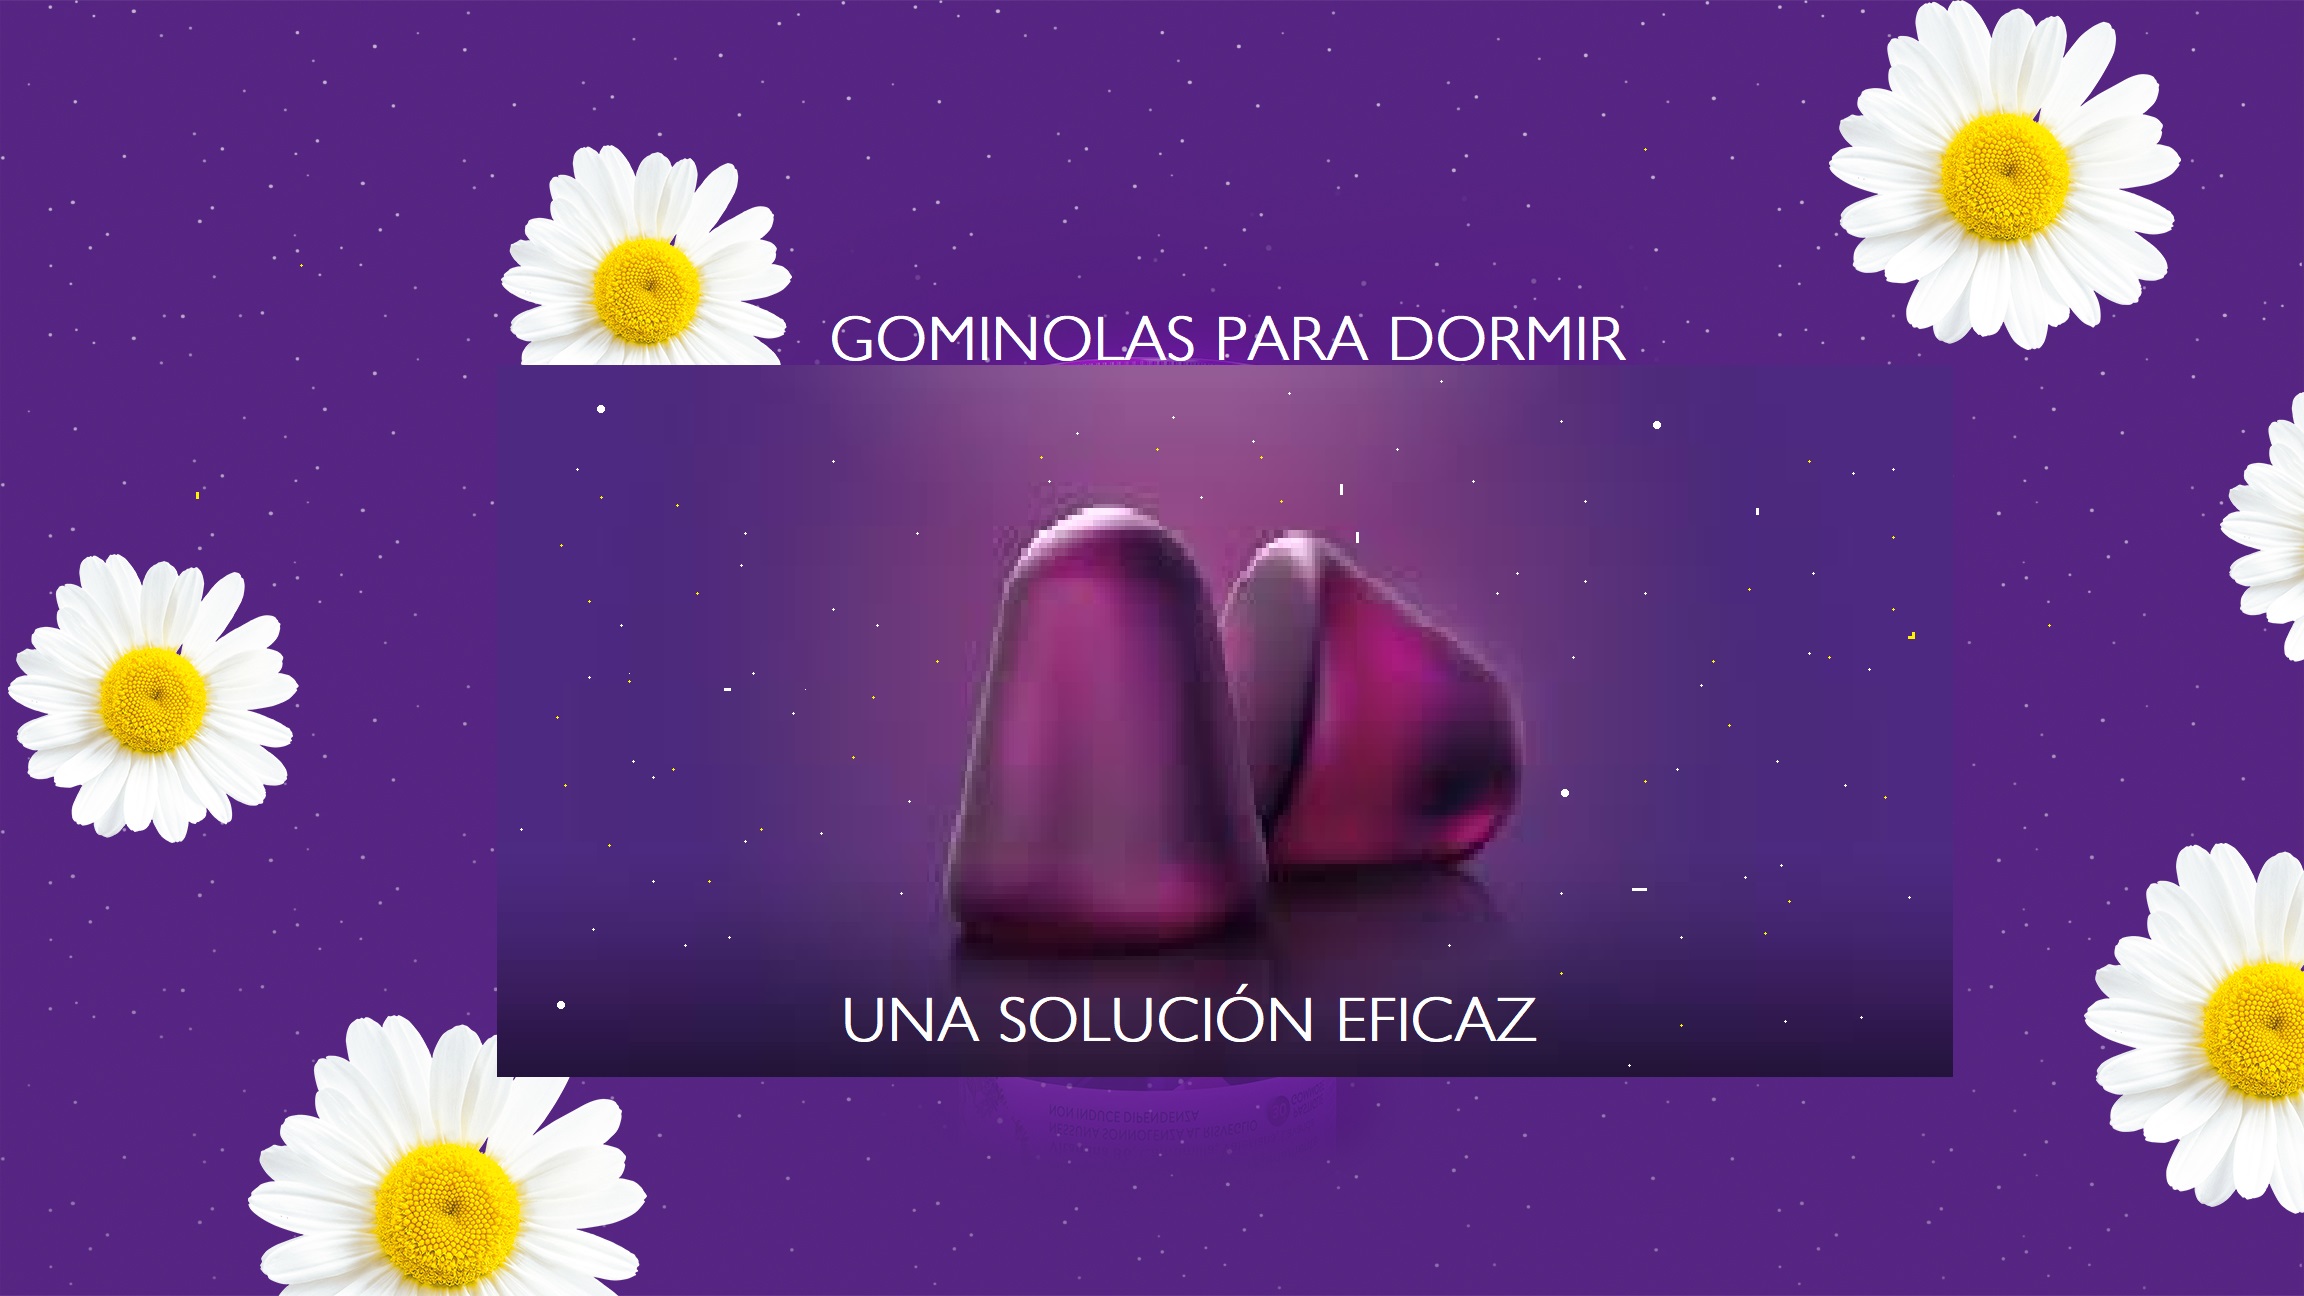 https://www.farmaciamarket.es/wordpress/wp-content/uploads/2021/06/gominolas-para-dormir-solucion-eficaz.jpg